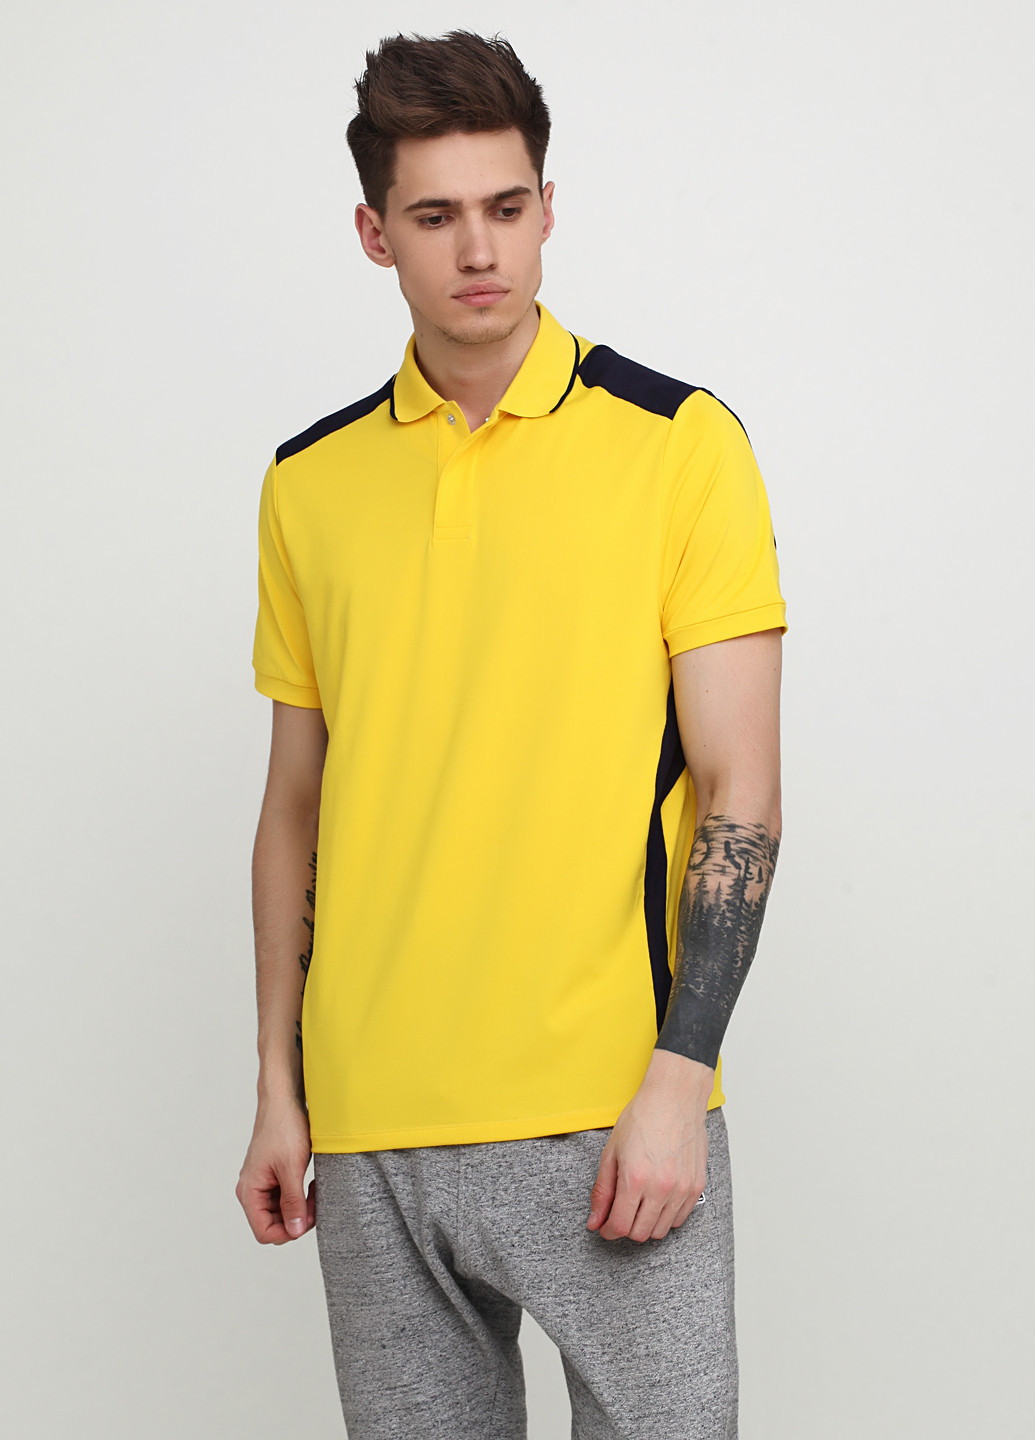 Желтая футболка-тенниска для мужчин Ralph Lauren однотонная